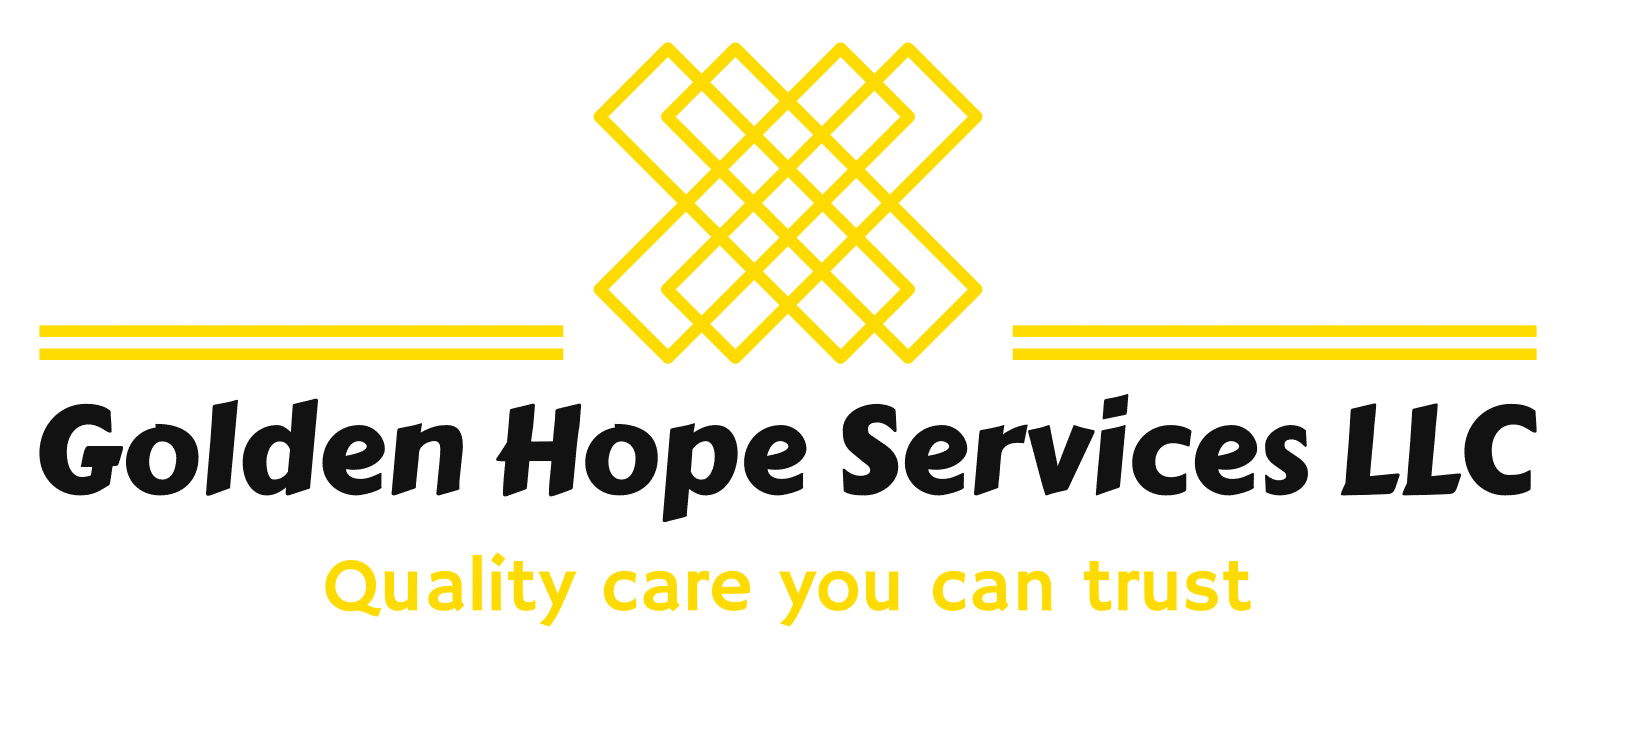 Golden Hope Services